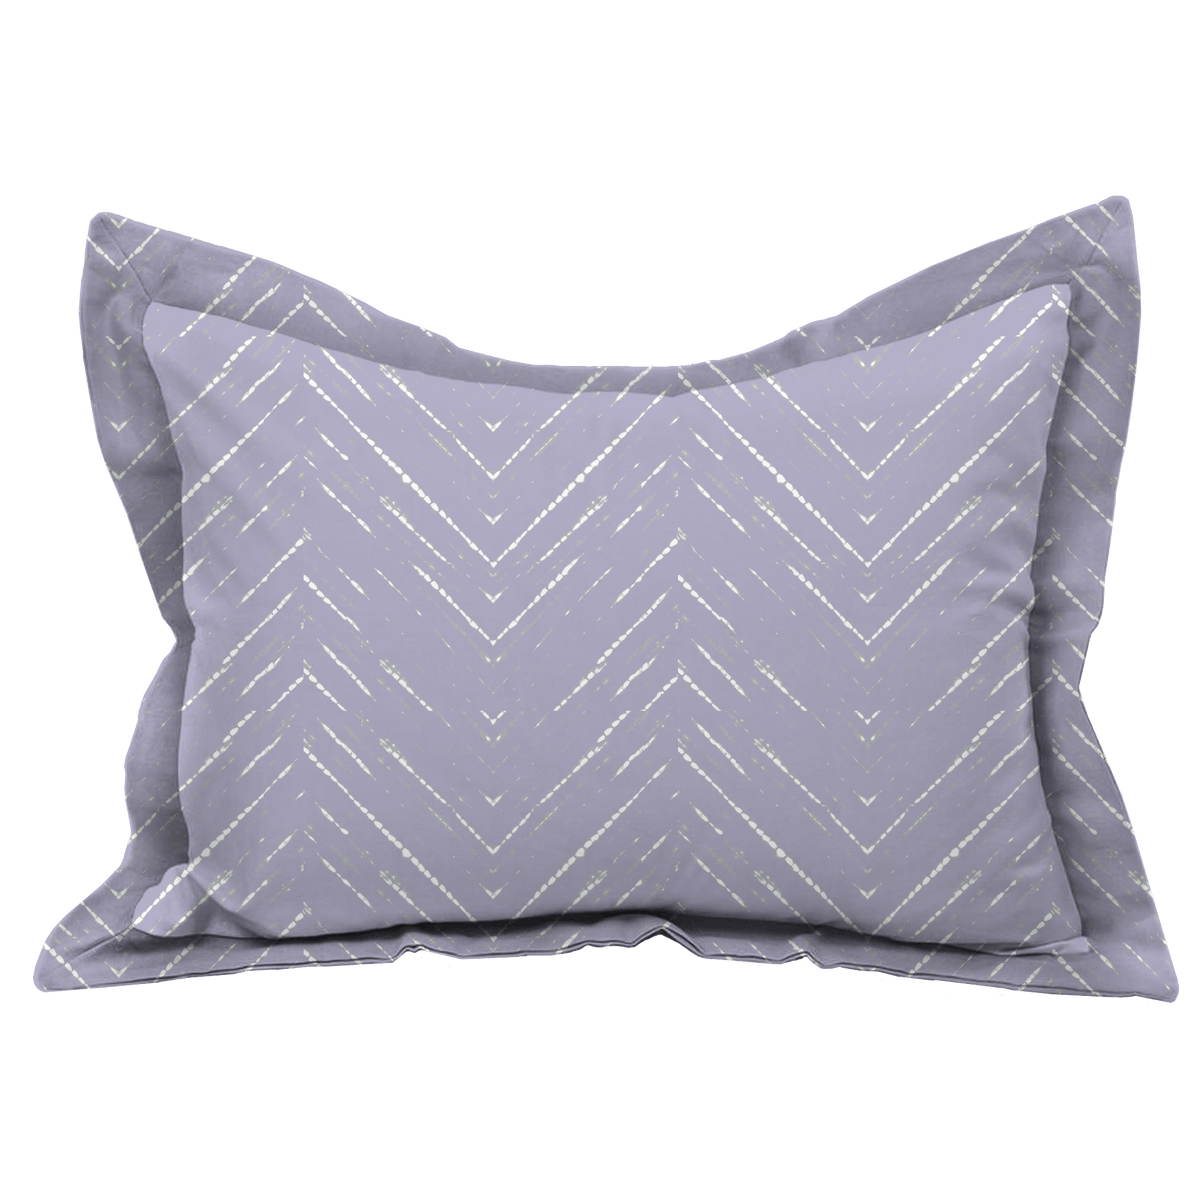 Standard Sham - Mariko Lavender Bedding, Shams MWW 